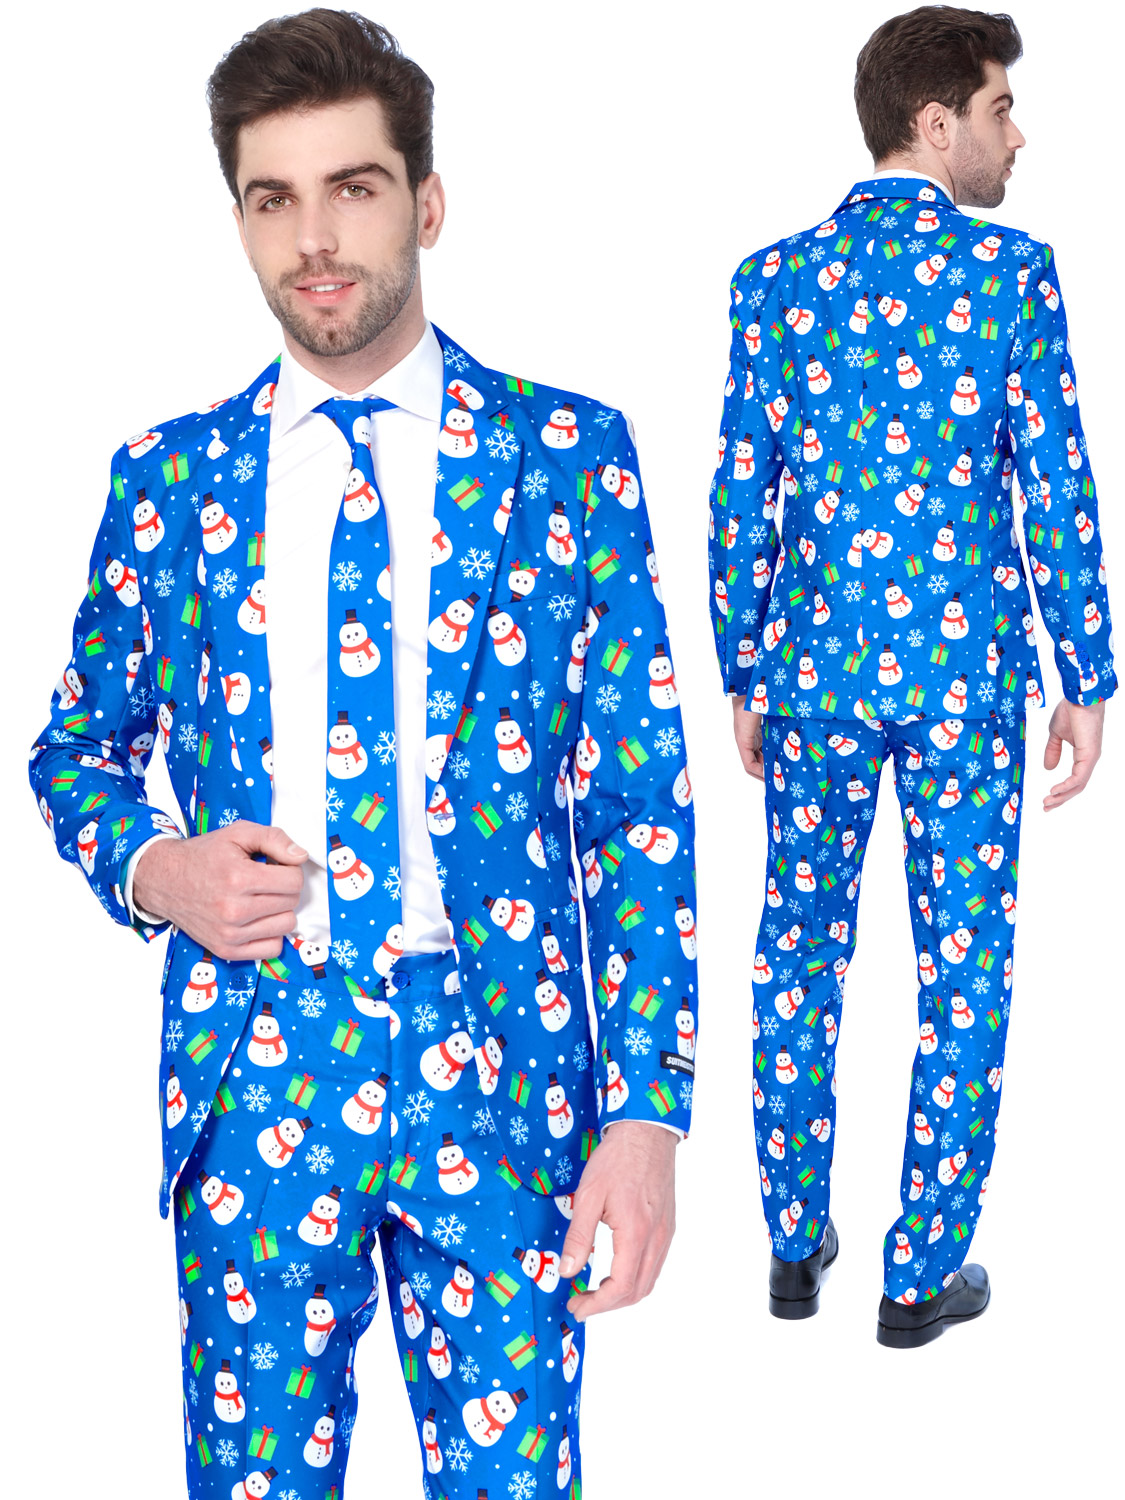 Mens Christmas Suitmeister Suit Xmas Party Festive Funny Fancy Dress